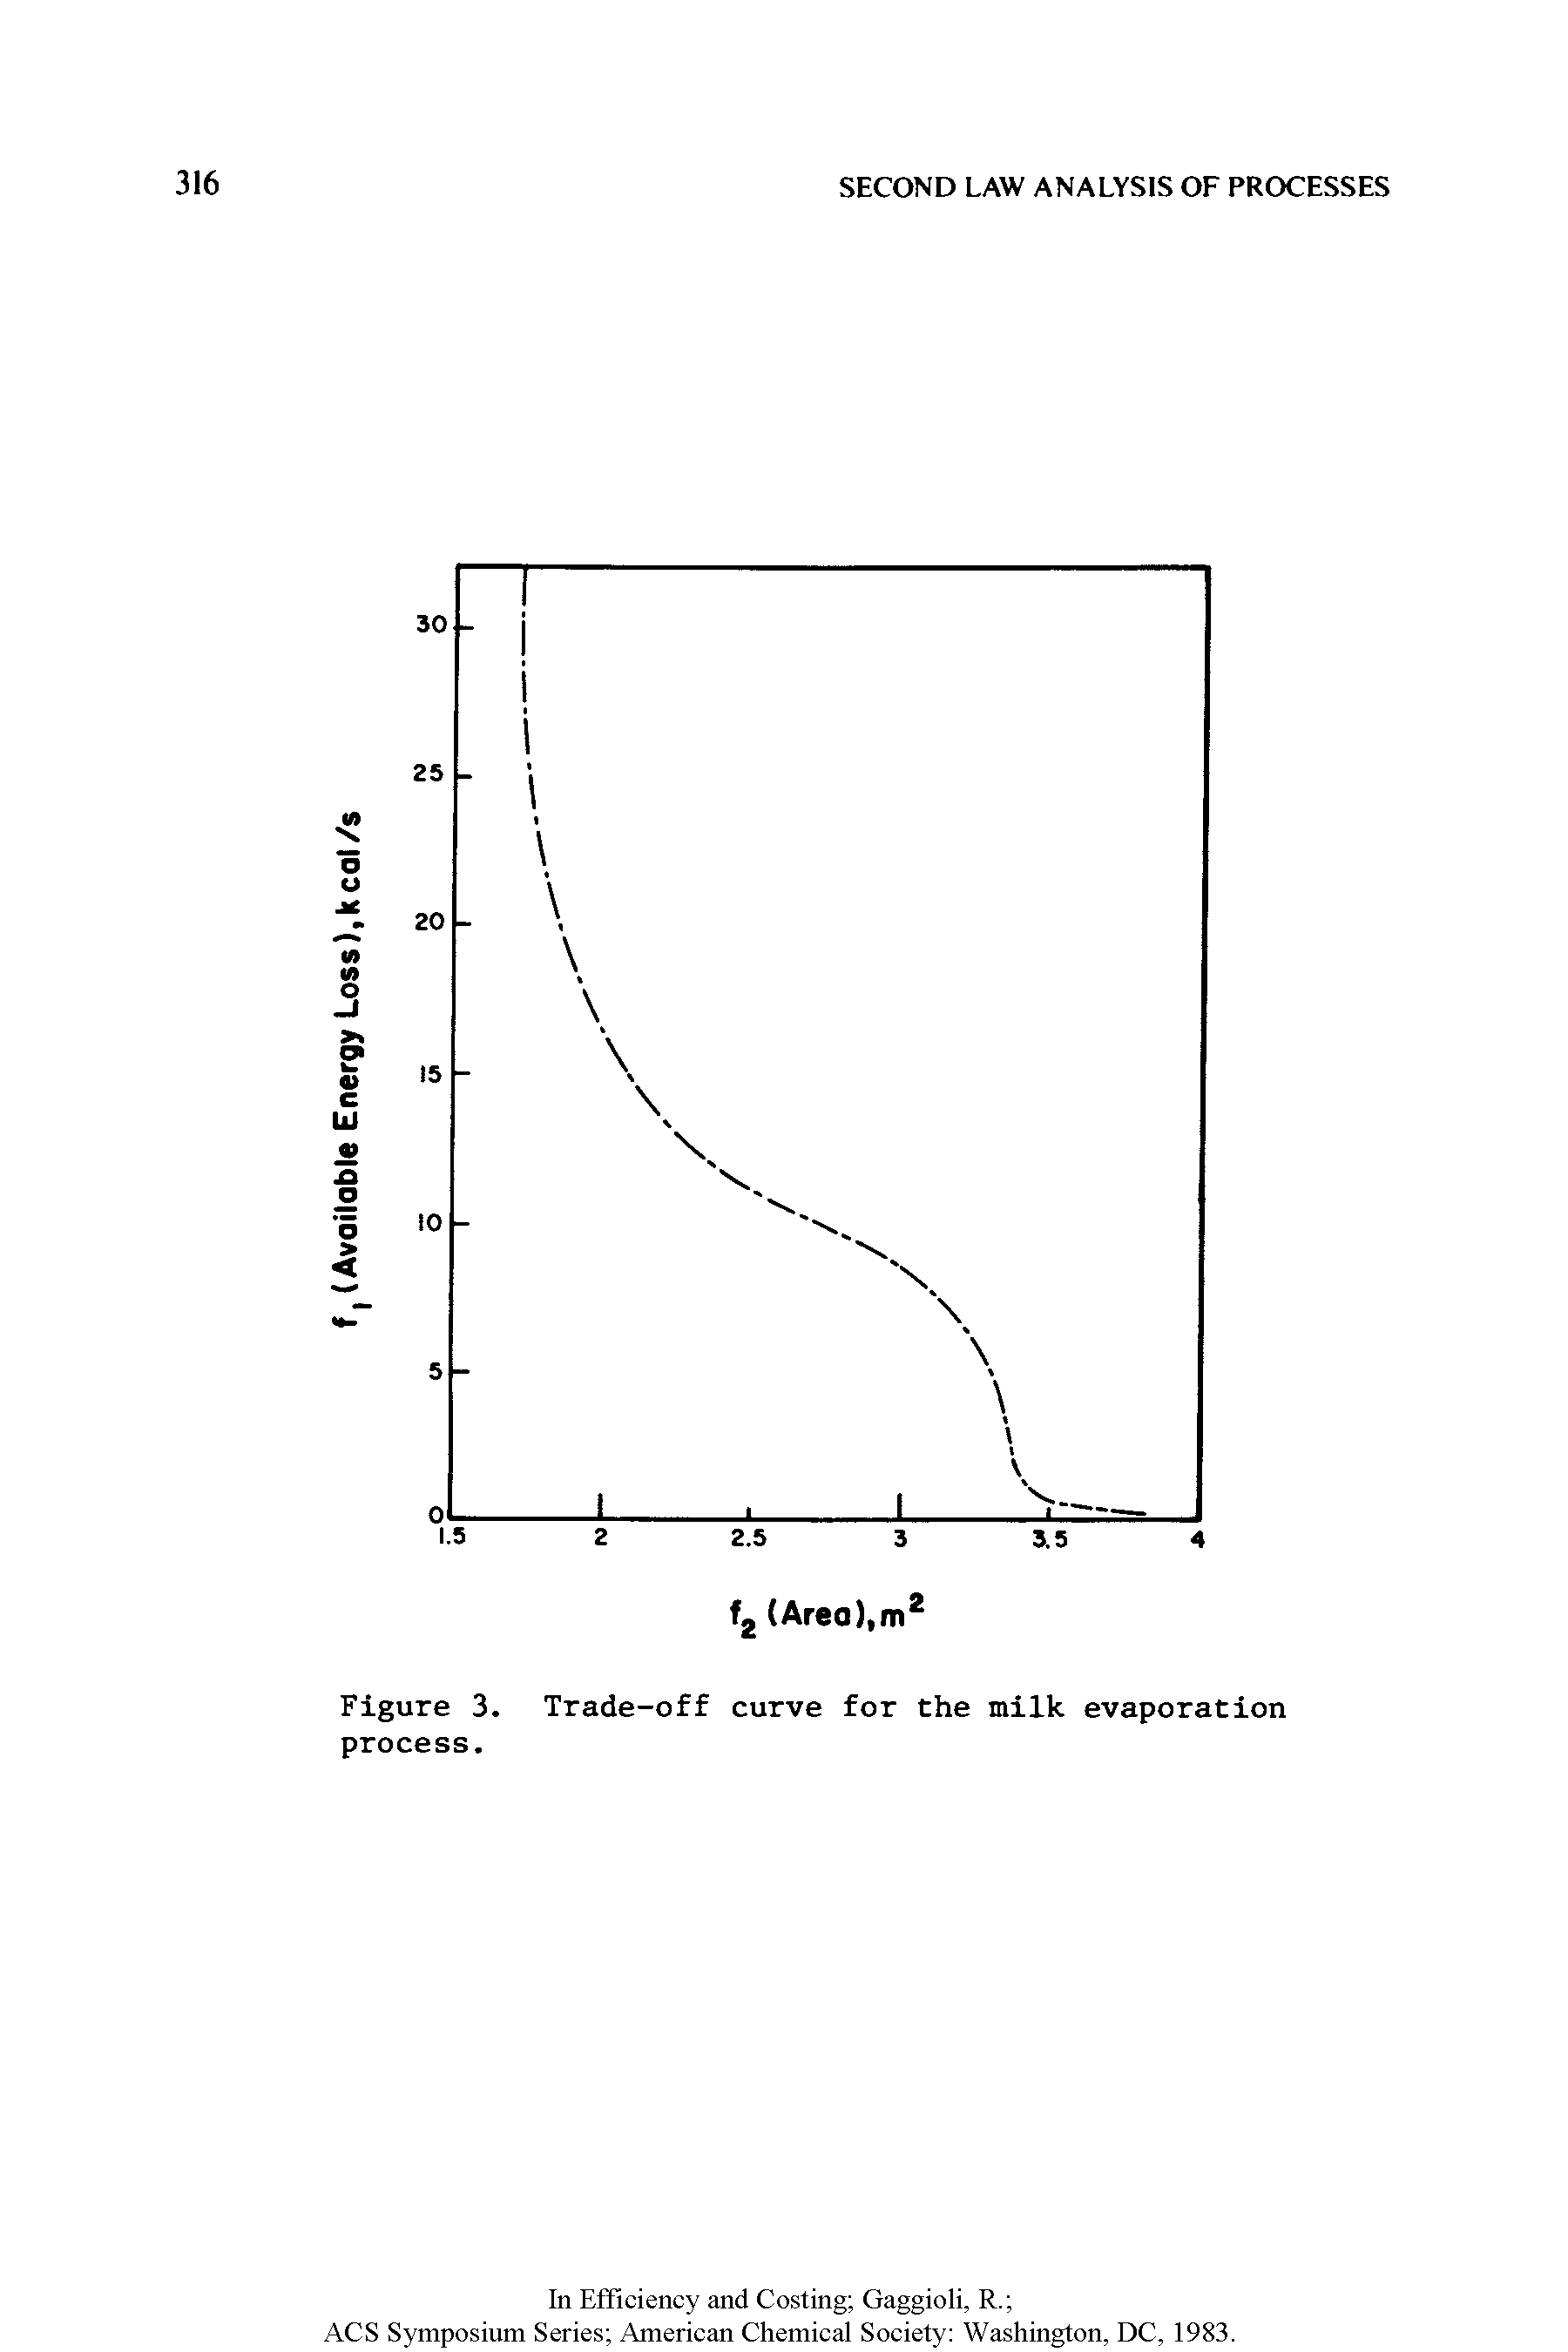 Figure 3. Trade-off curve for the milk evaporation process.